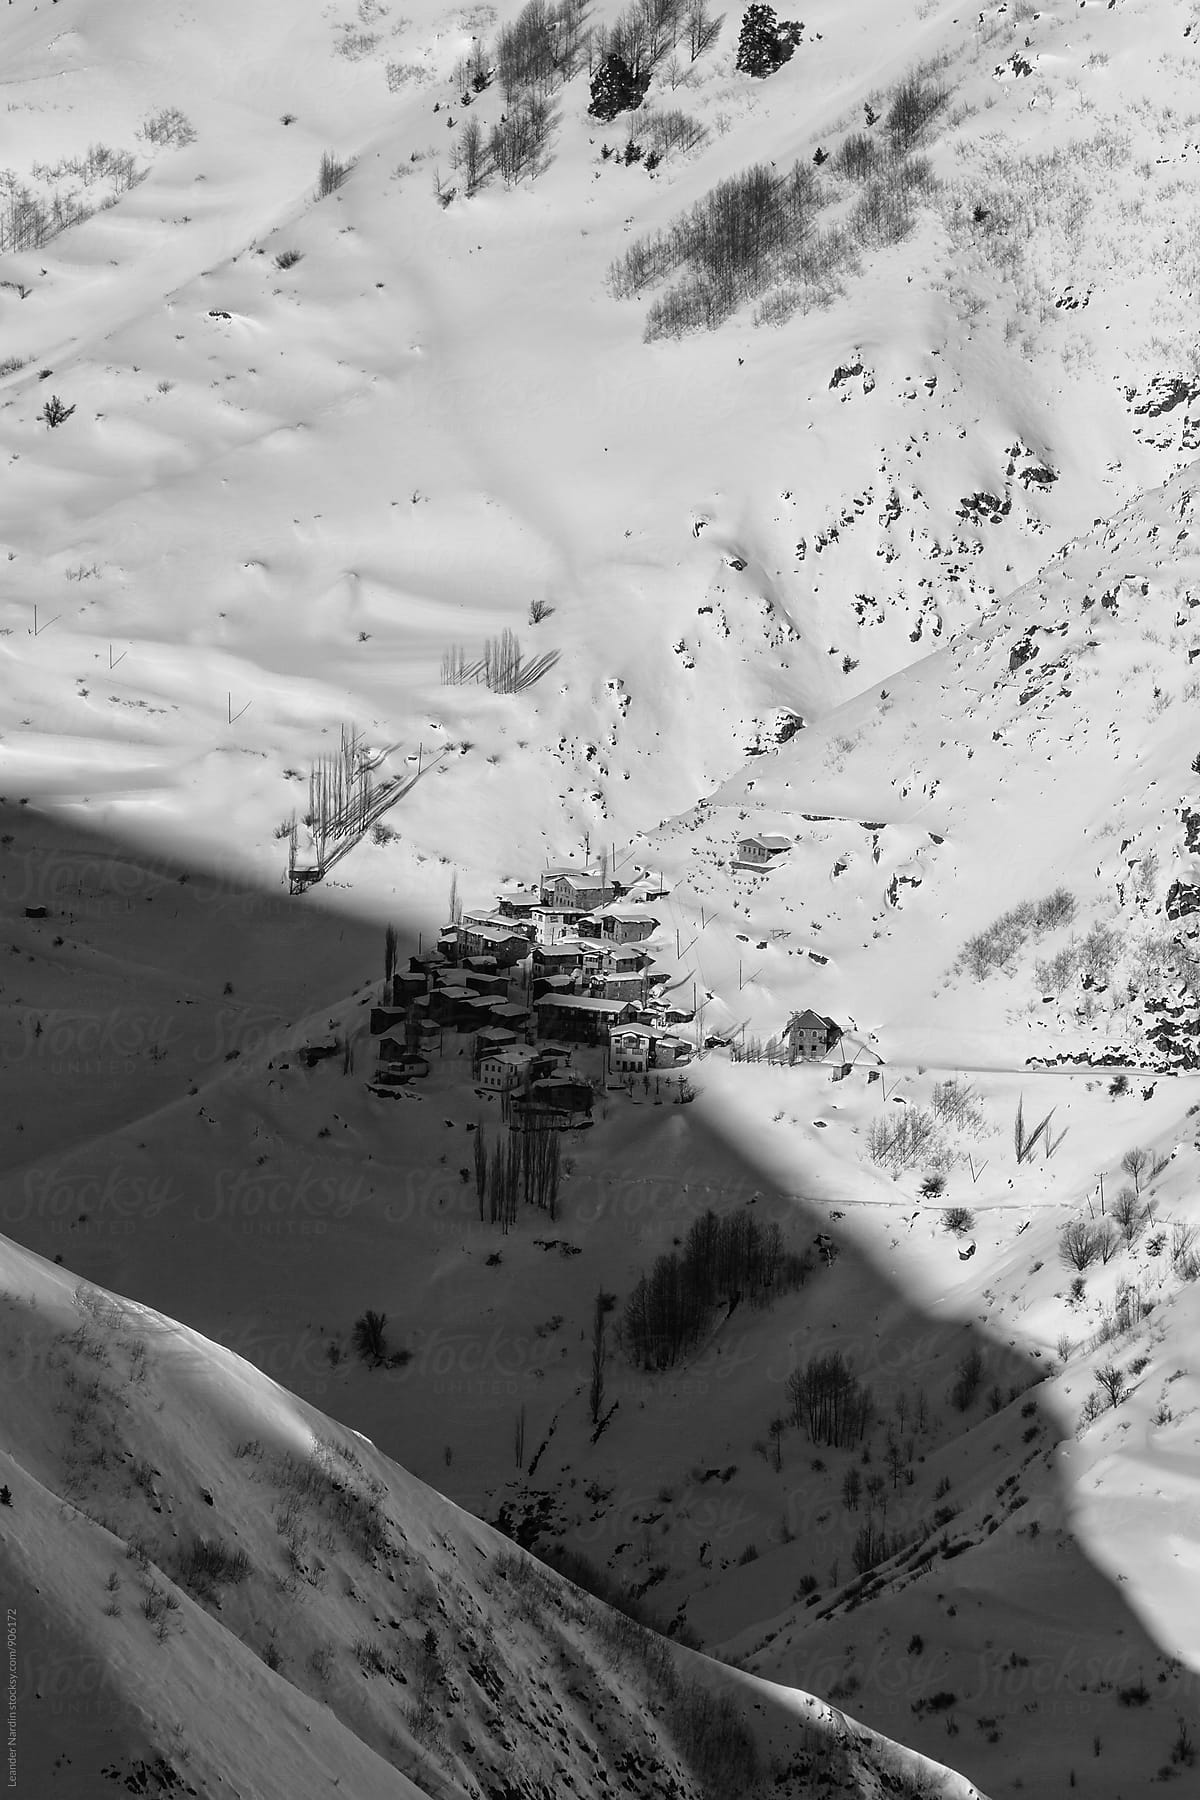 small remote village in snowcovered mountain landscape in east anatolia, turkey - black and white